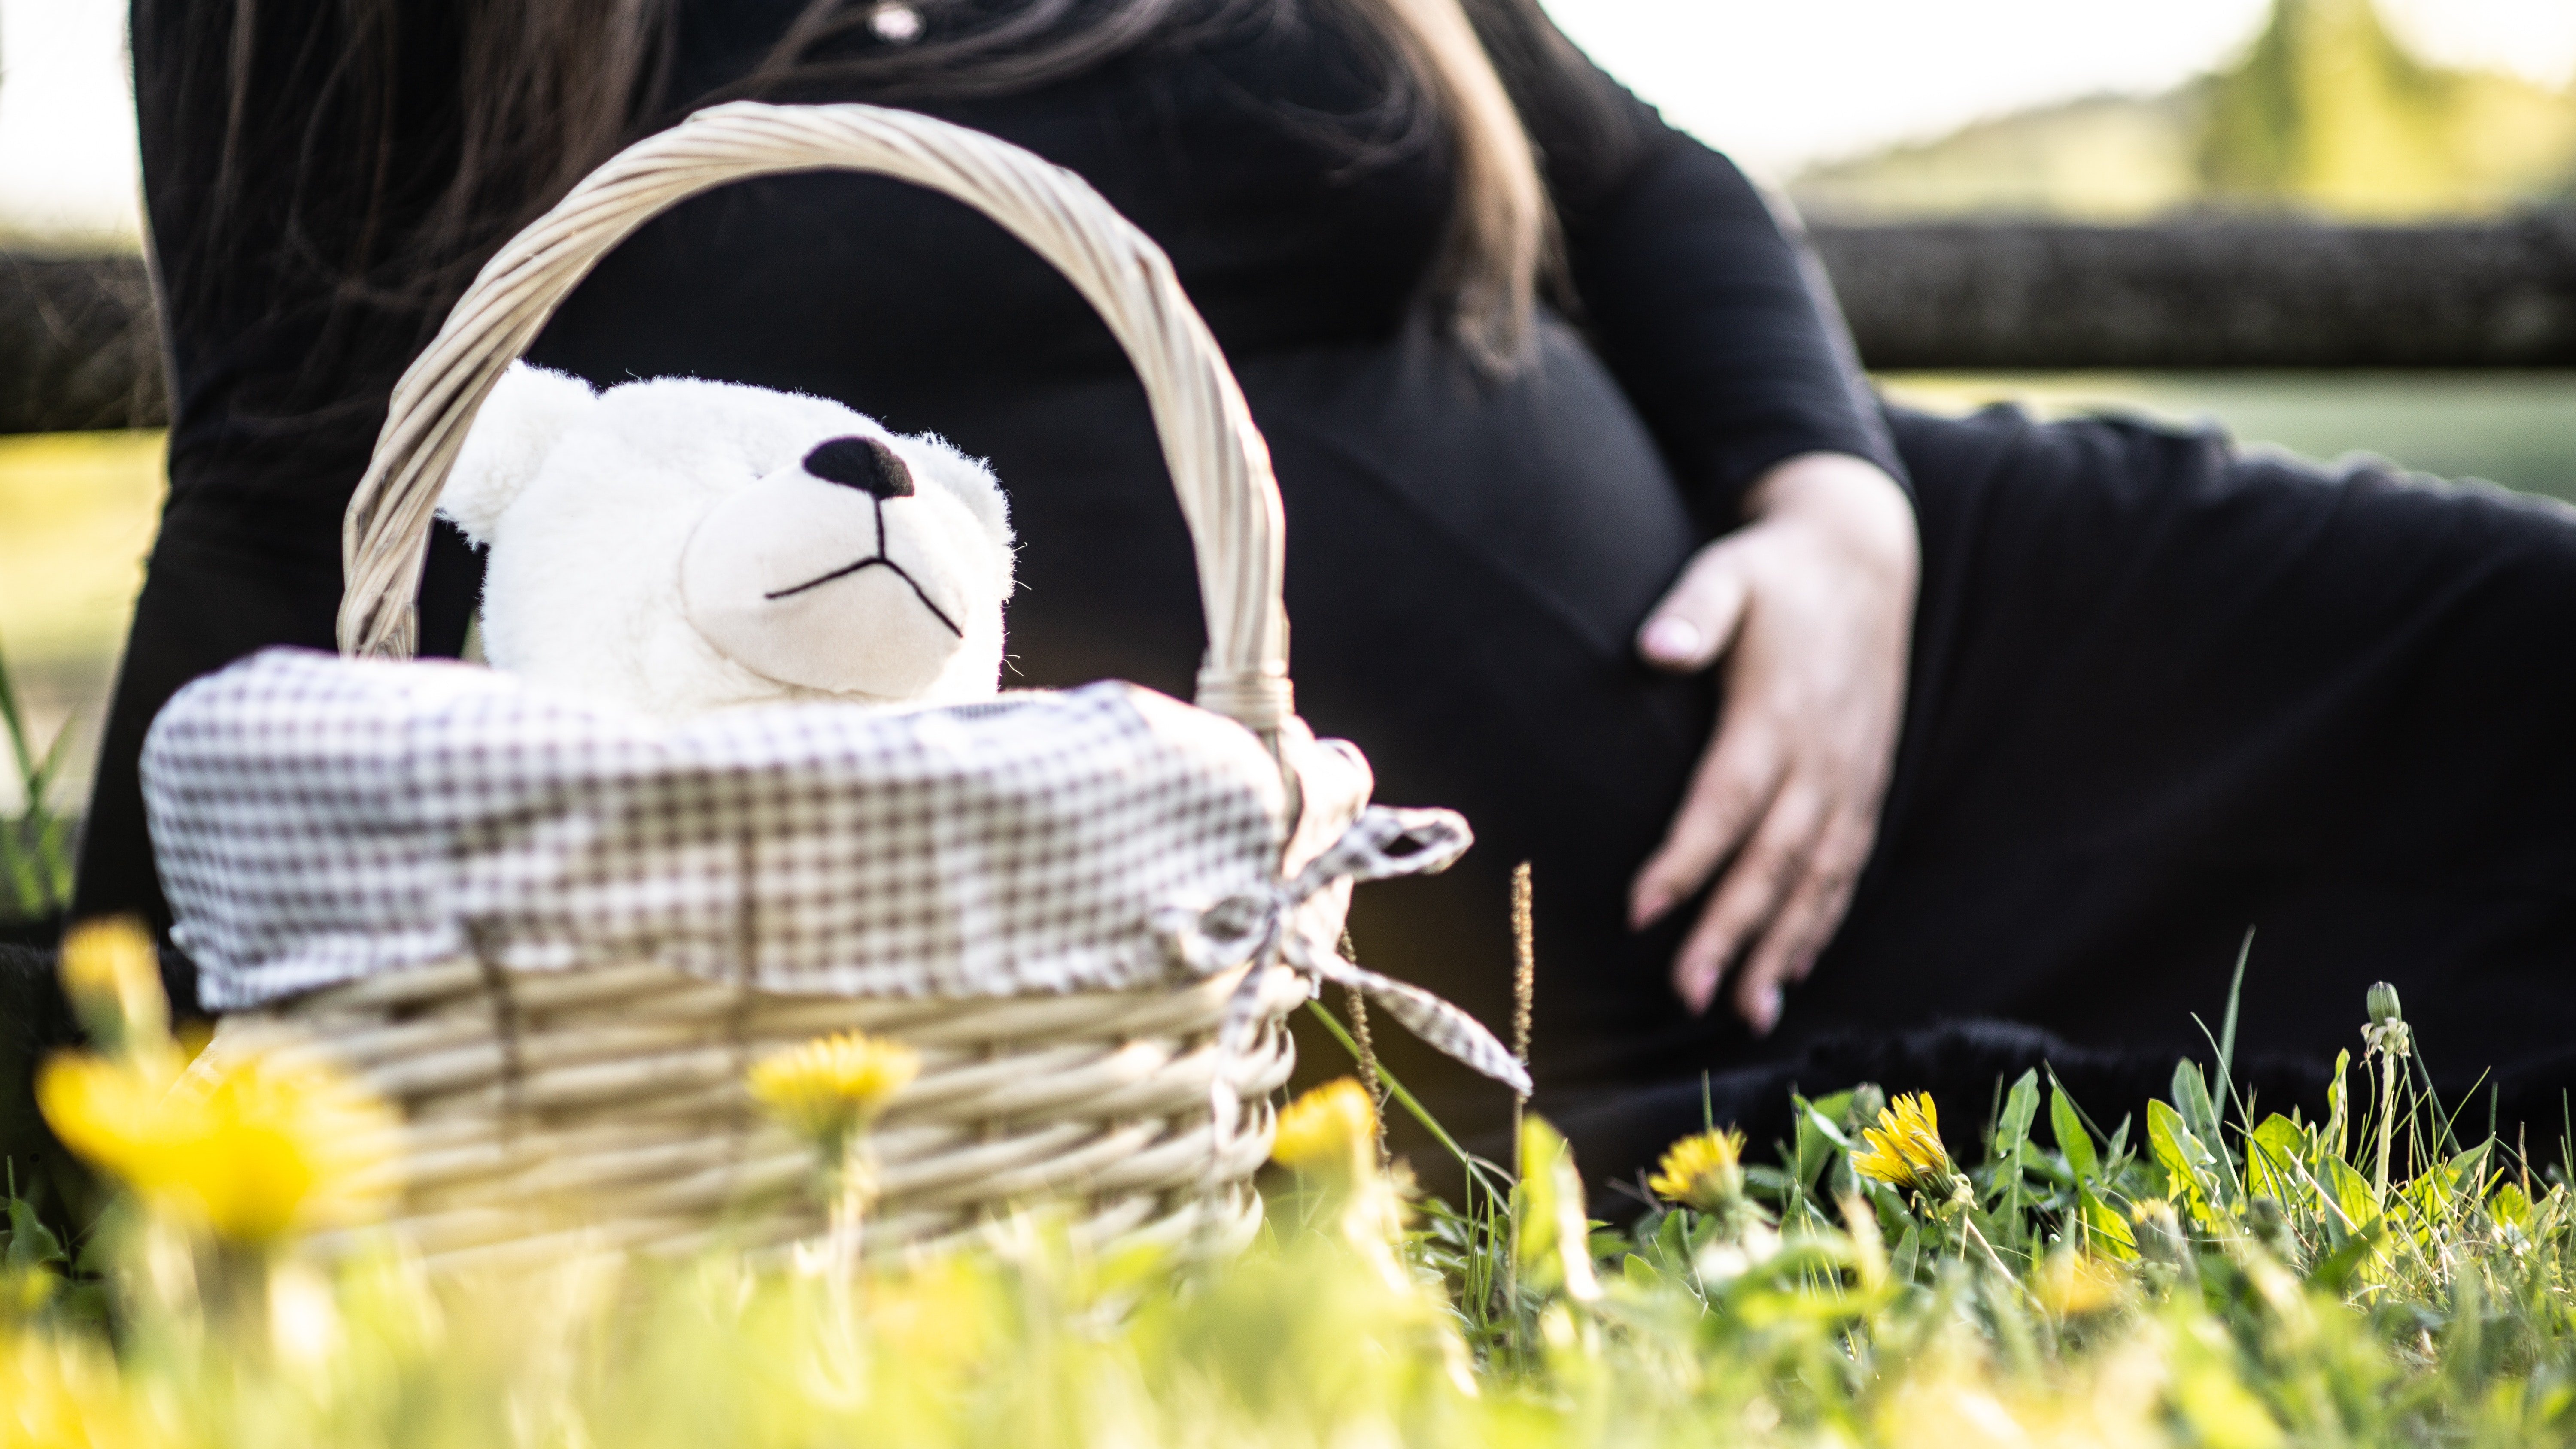 Pregnant woman sitting on grass near picnic basket. | Source: Pexels